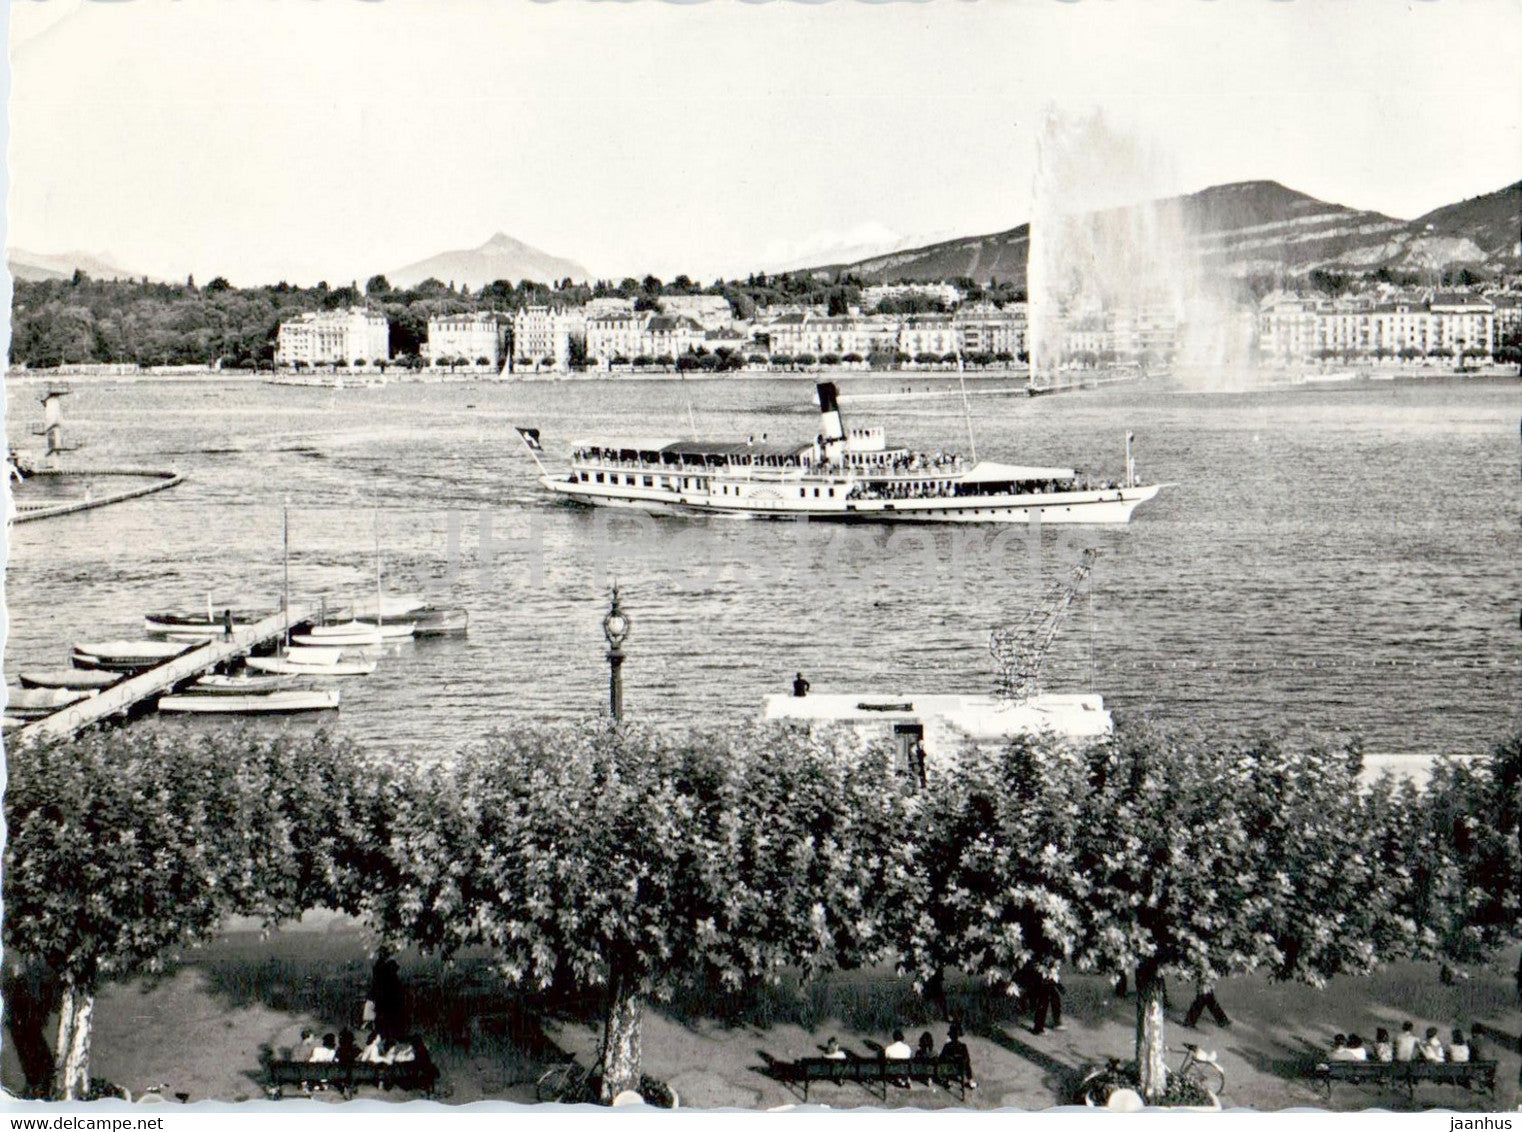 Geneve - Le Jet d' Eau - ship - 151 - old postcard - 1957 - Switzerland - used - JH Postcards